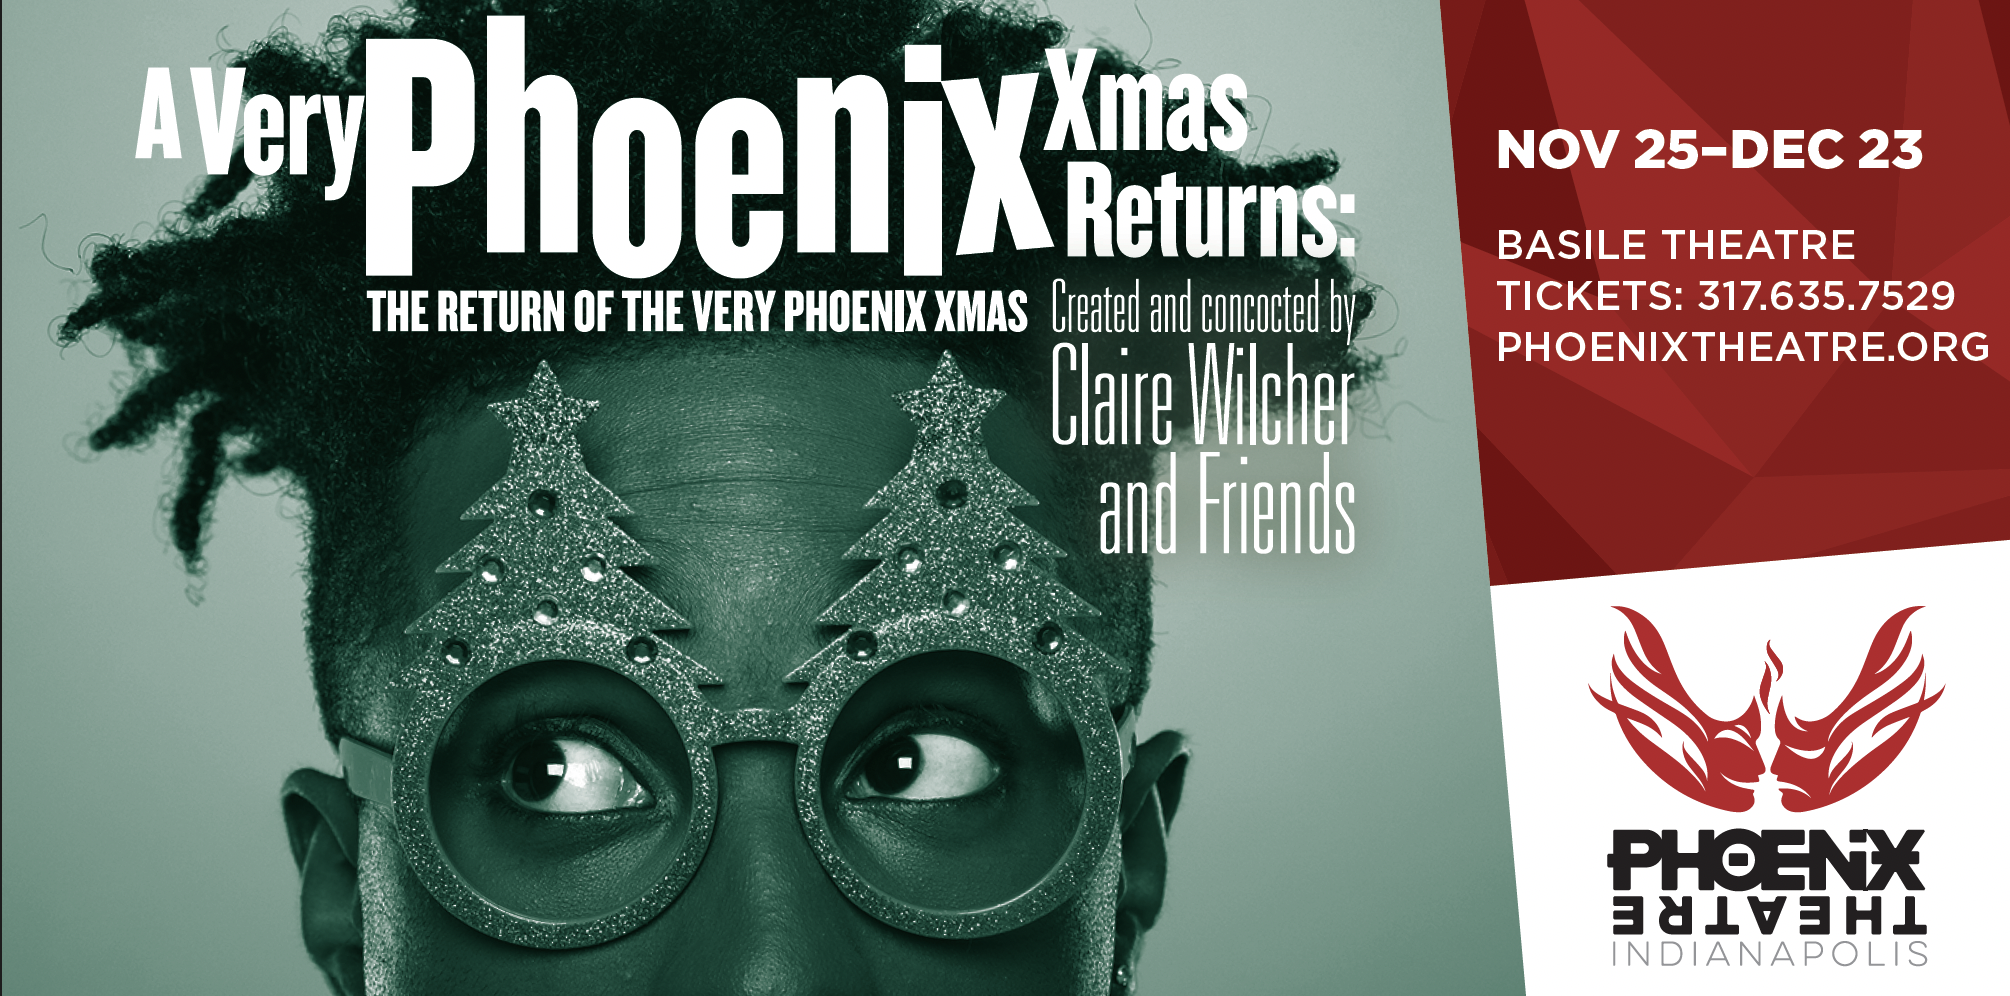 A Very Phoenix Xmas Returns: the Return of A Very Phoenix Xmas